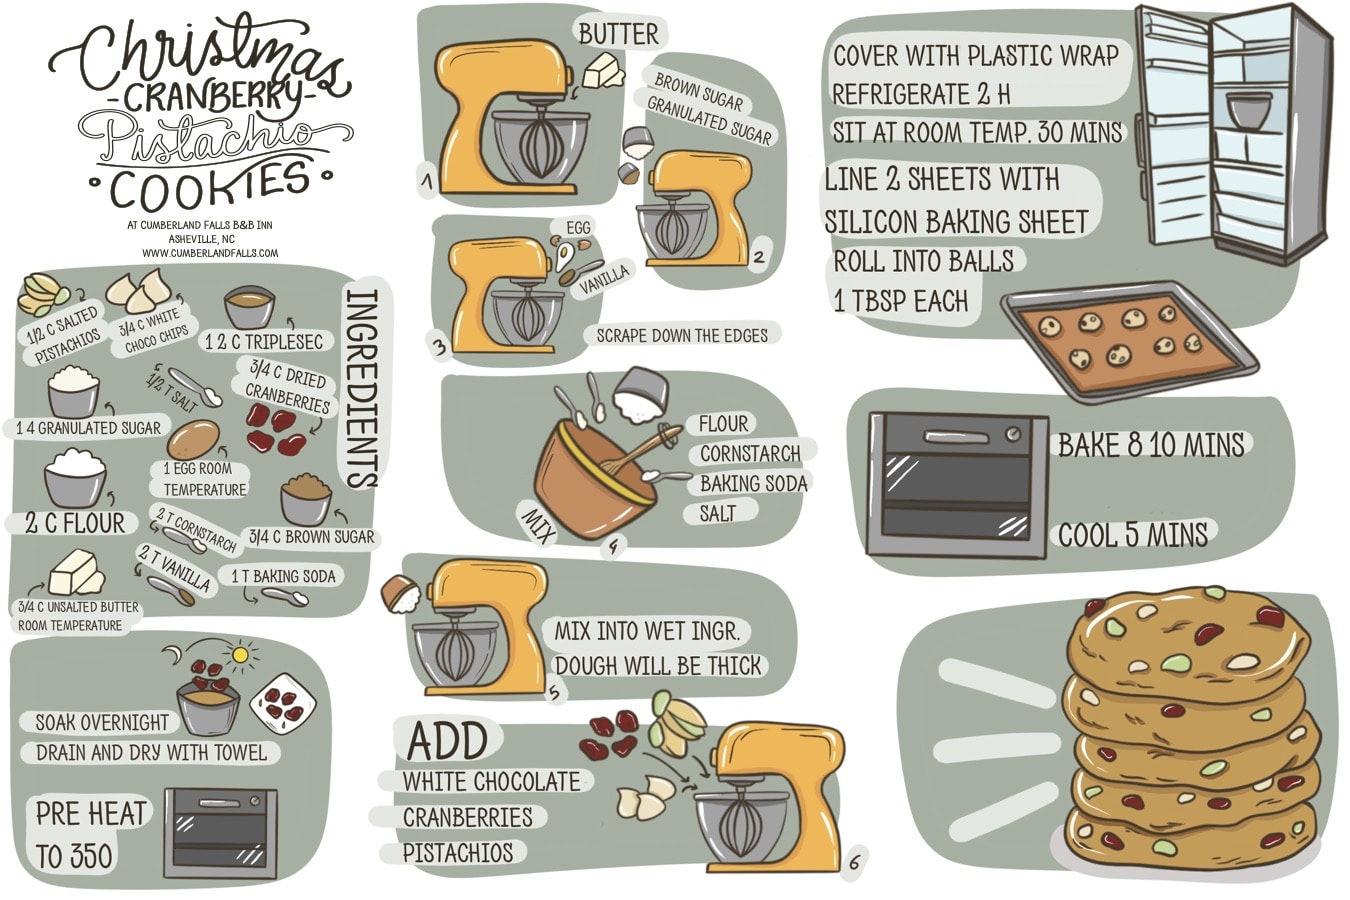 handwritten recipe card for cookies